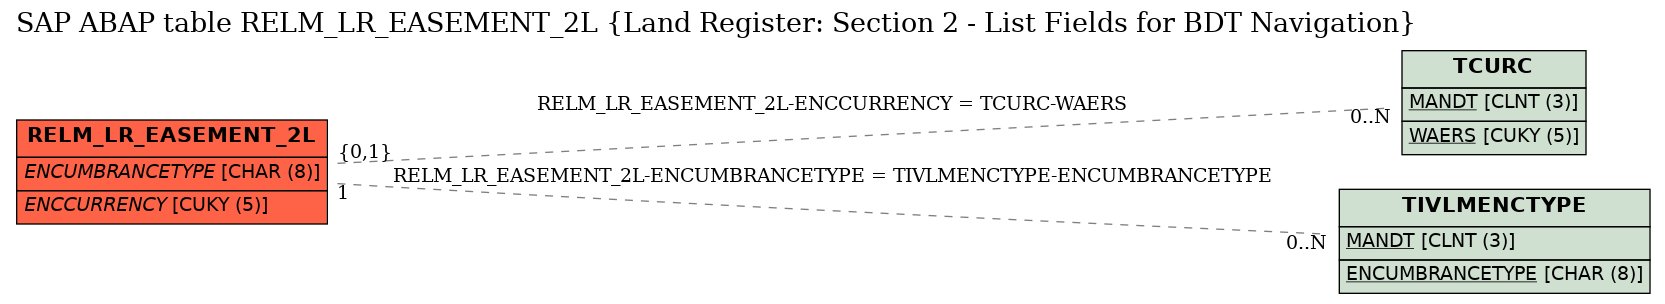 E-R Diagram for table RELM_LR_EASEMENT_2L (Land Register: Section 2 - List Fields for BDT Navigation)